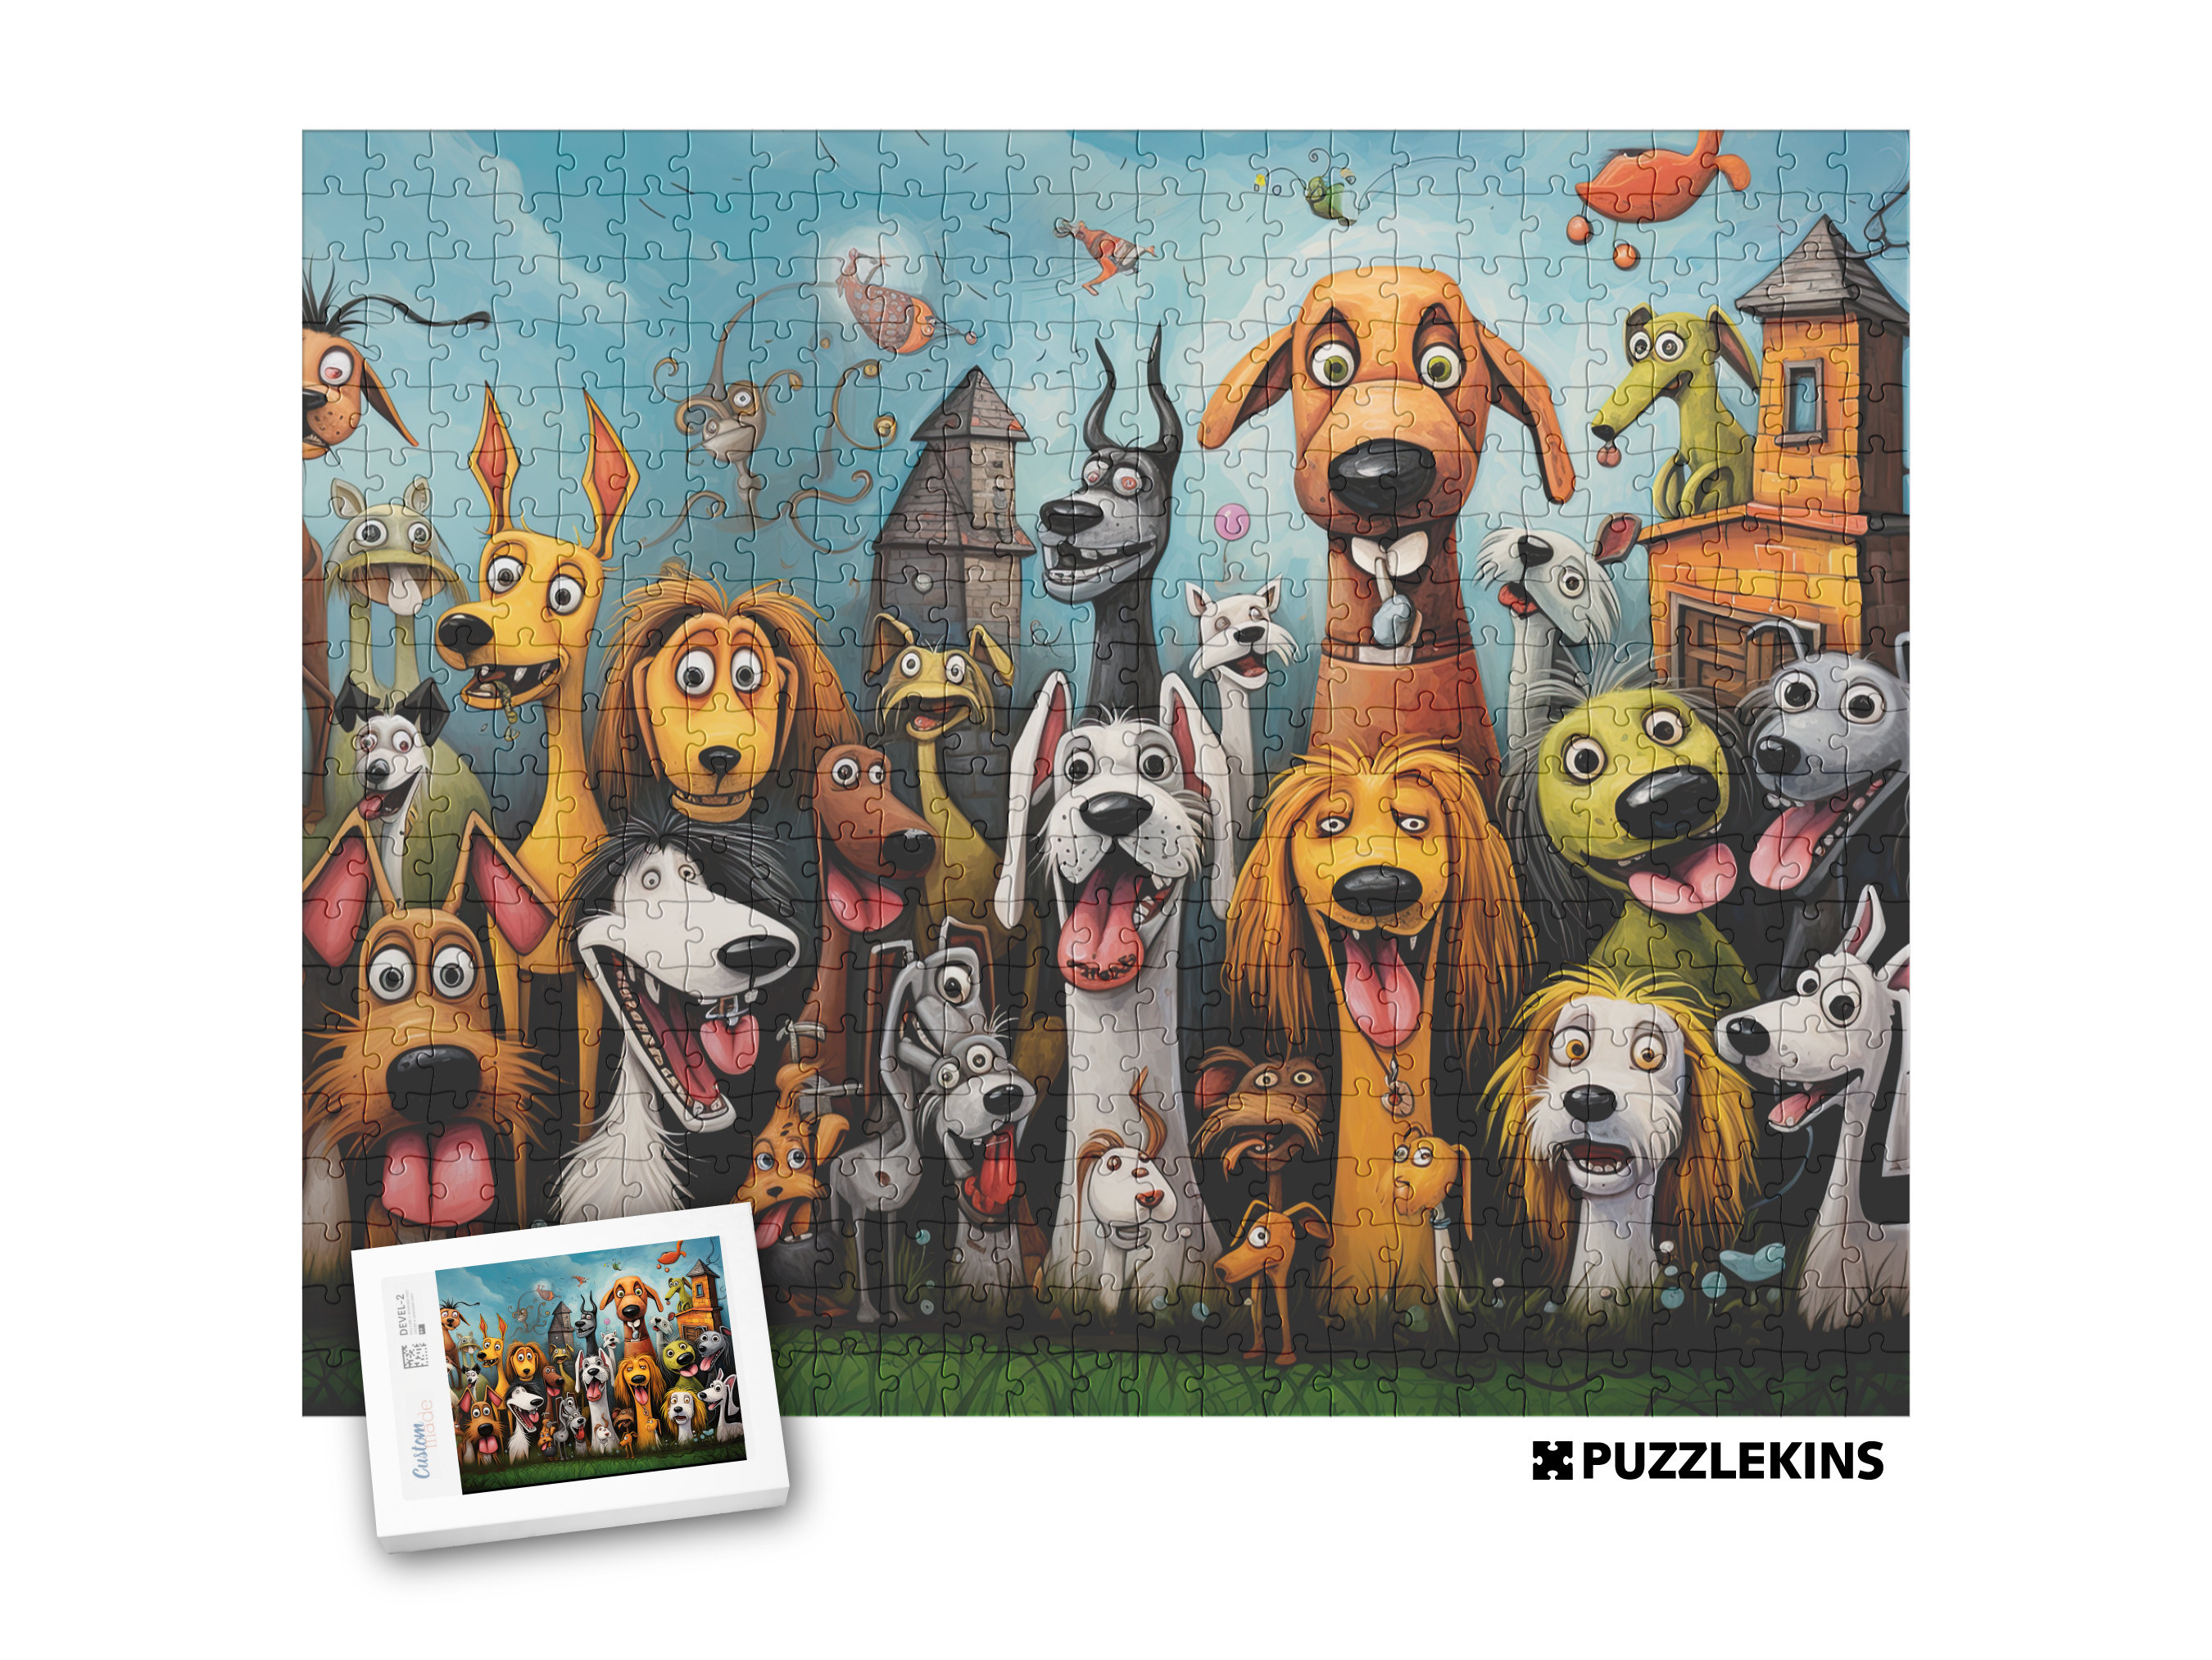 Titus Dog Puzzle 9 pieces (wood) : Toddler wooden puzzles Janod - J07066